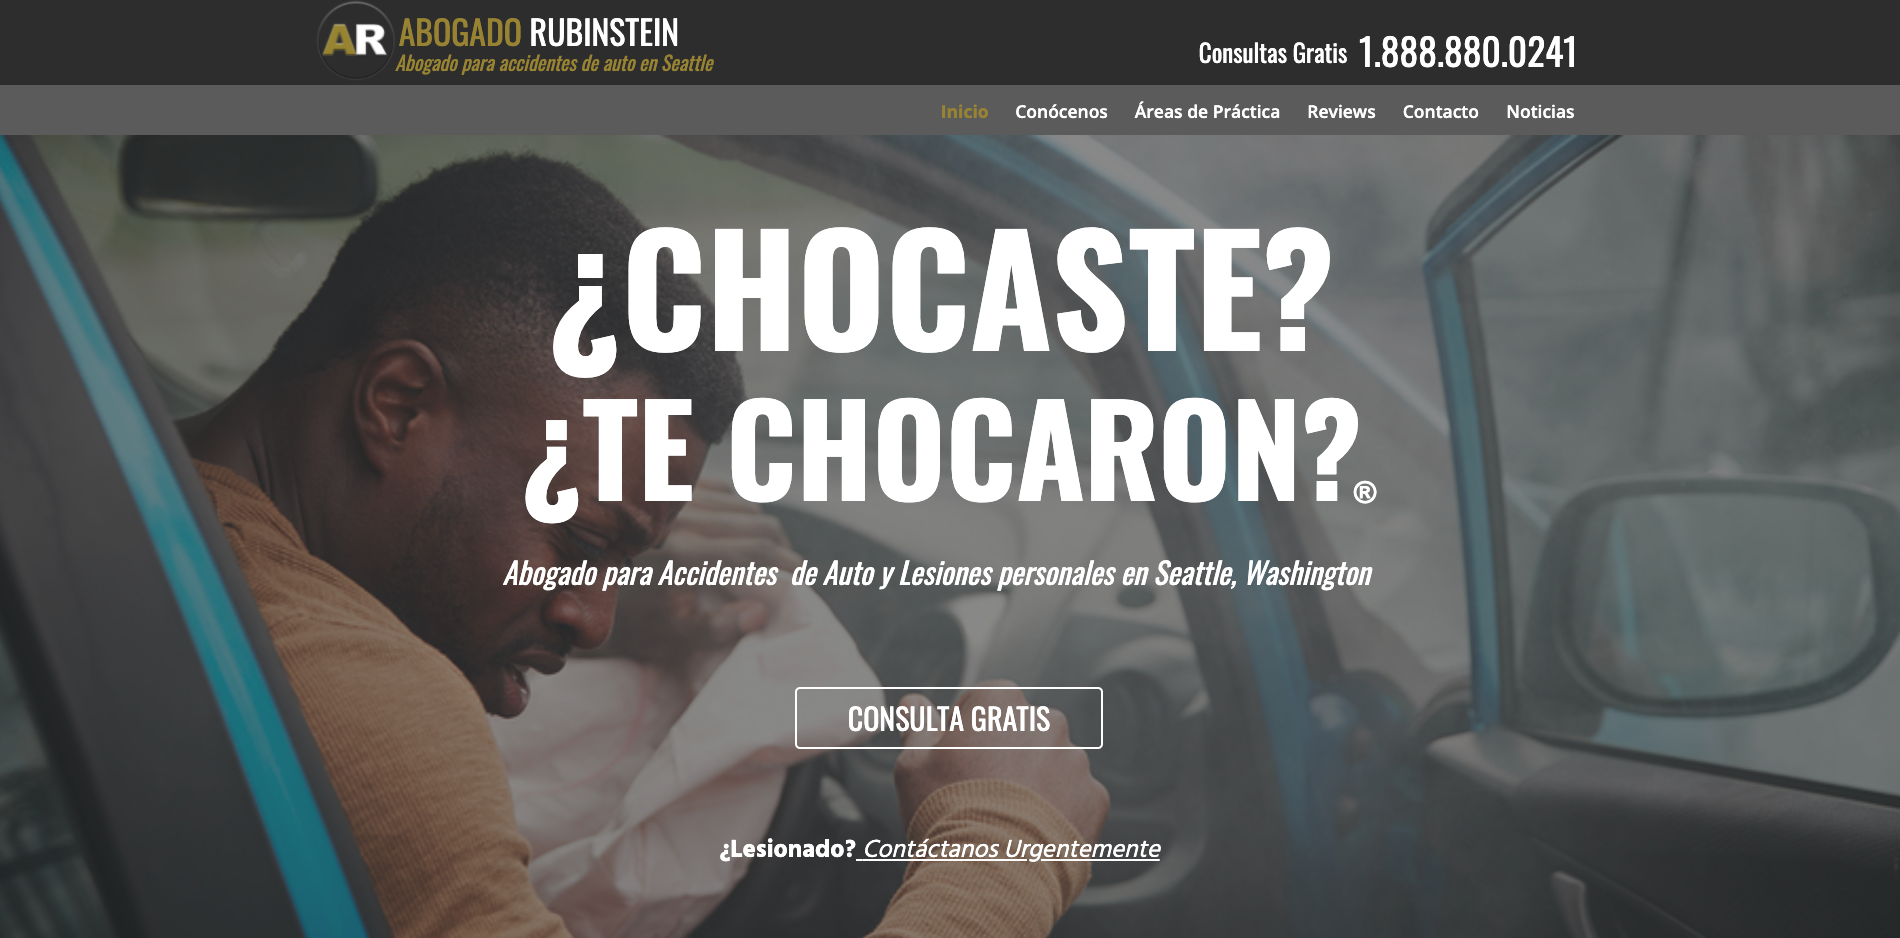 Auto accident Injury websites in Spanish